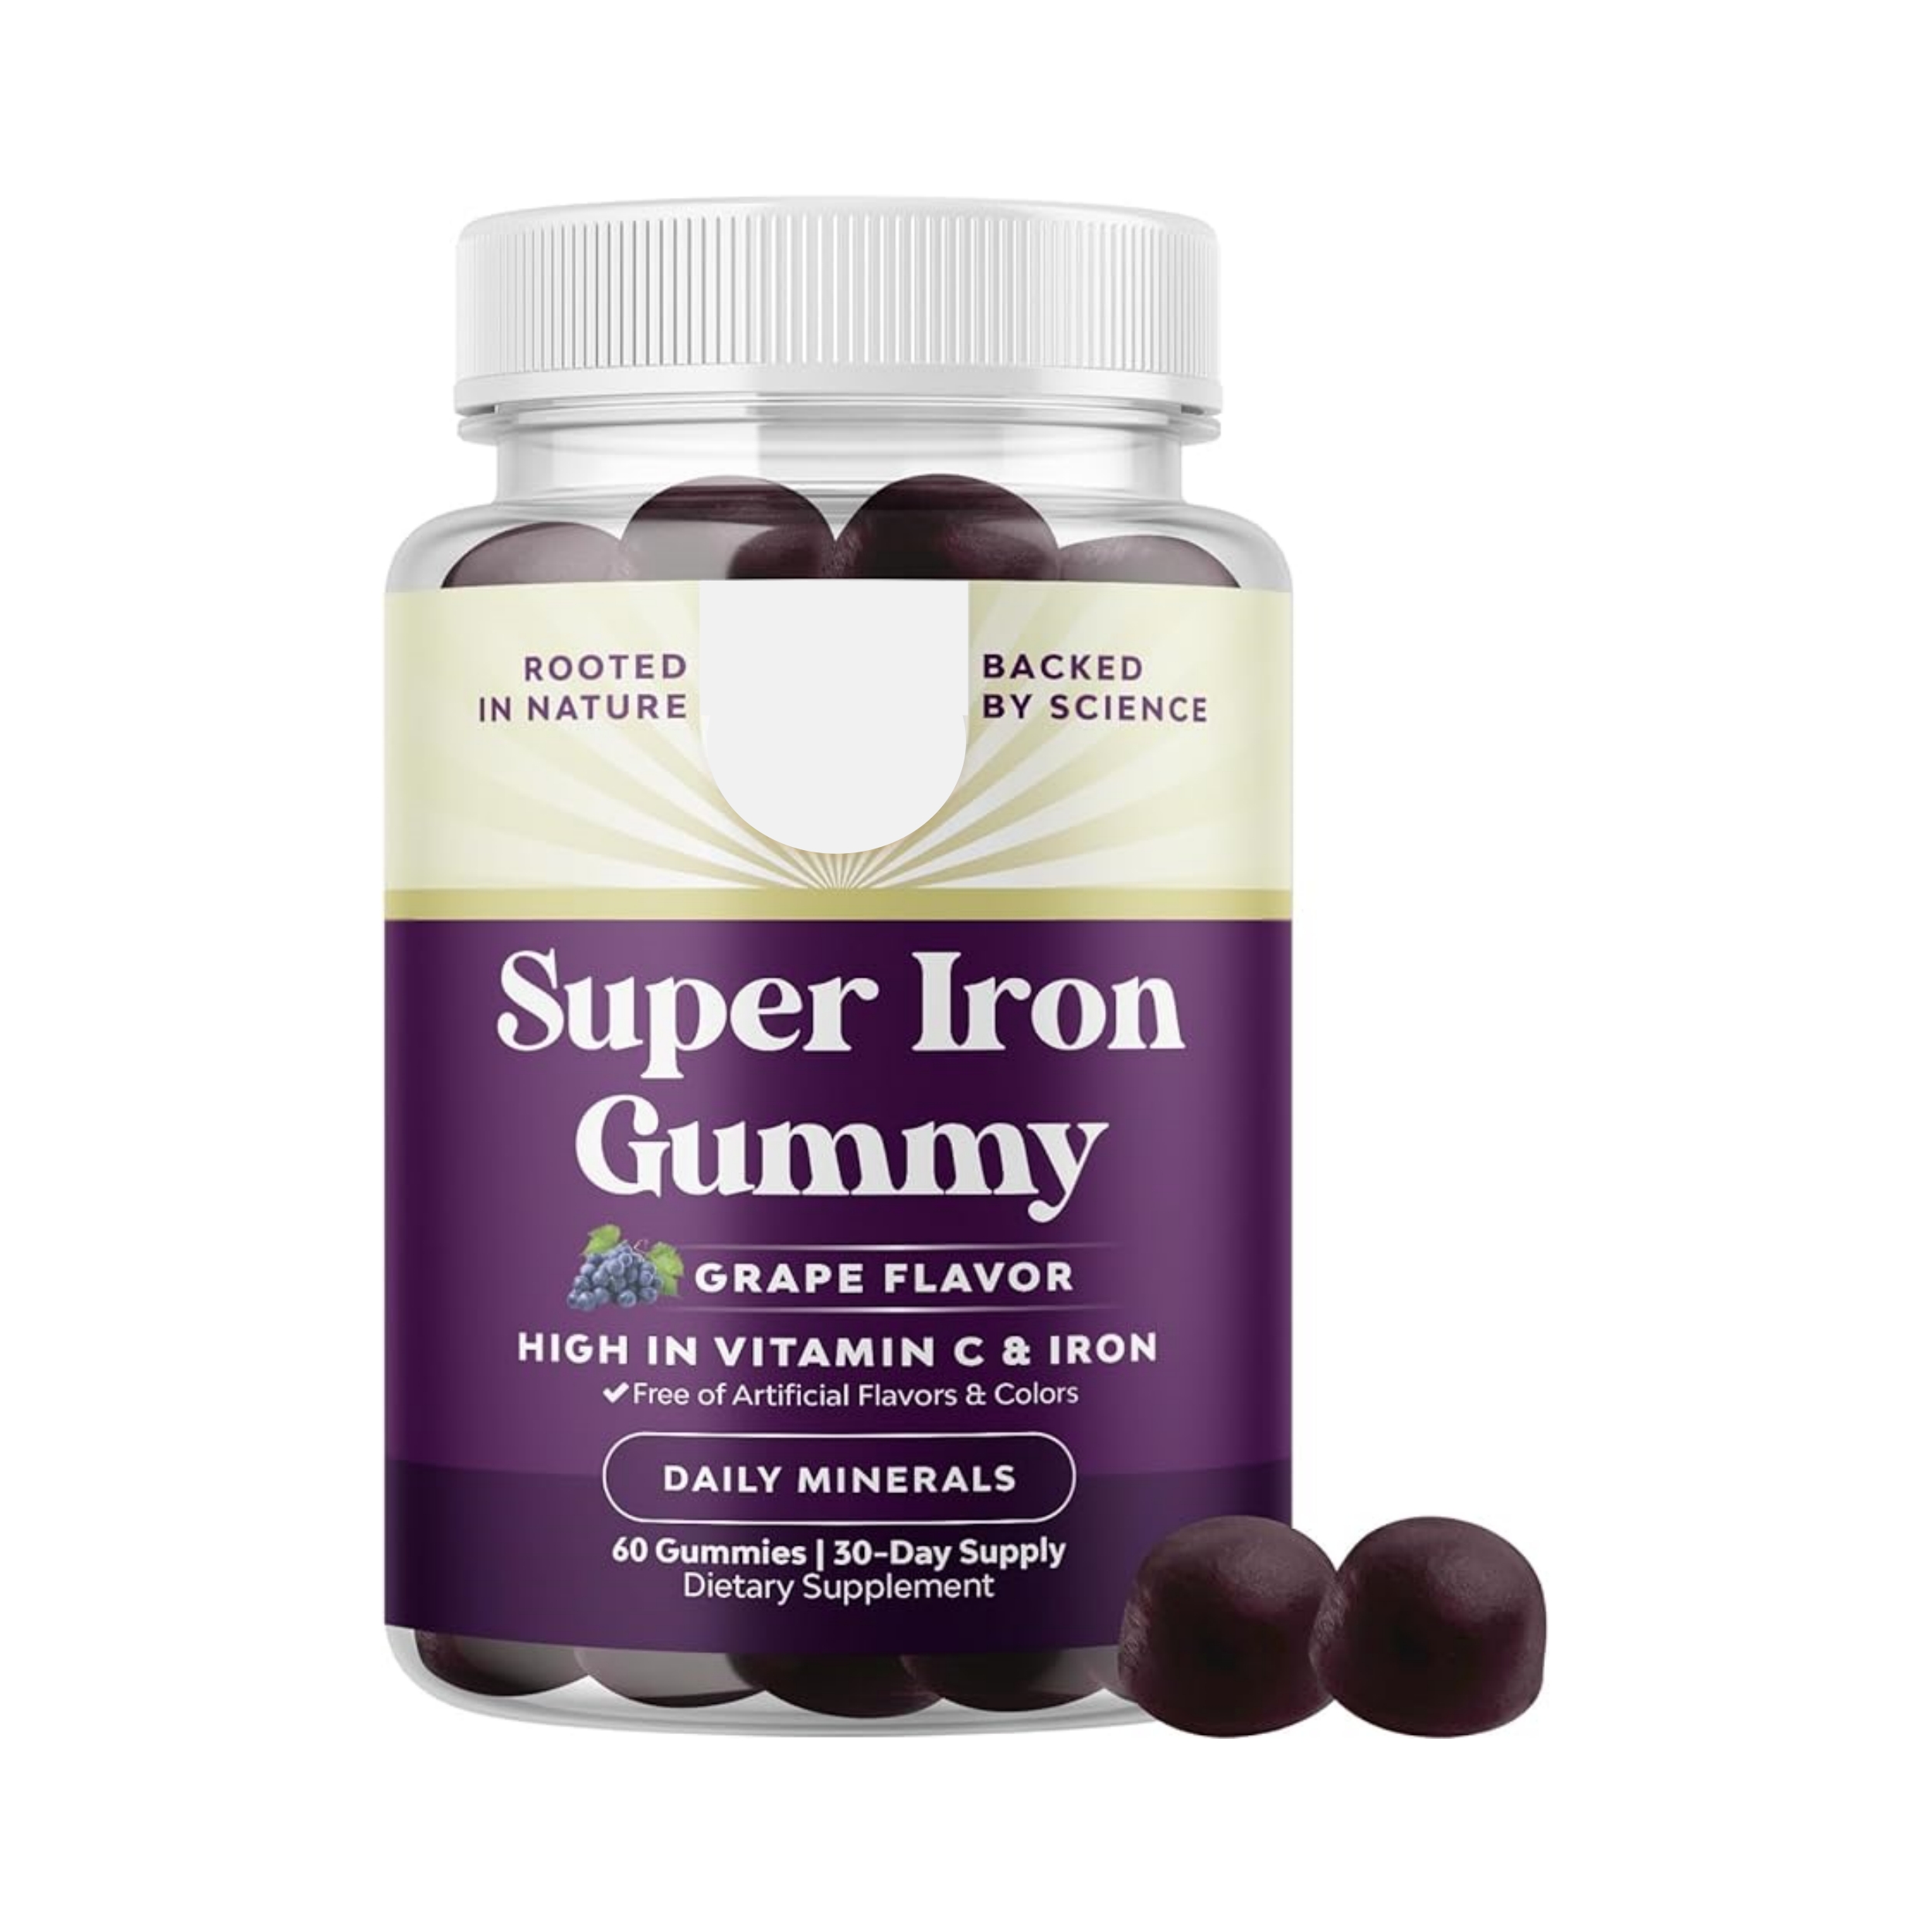 Super Iron Gummy